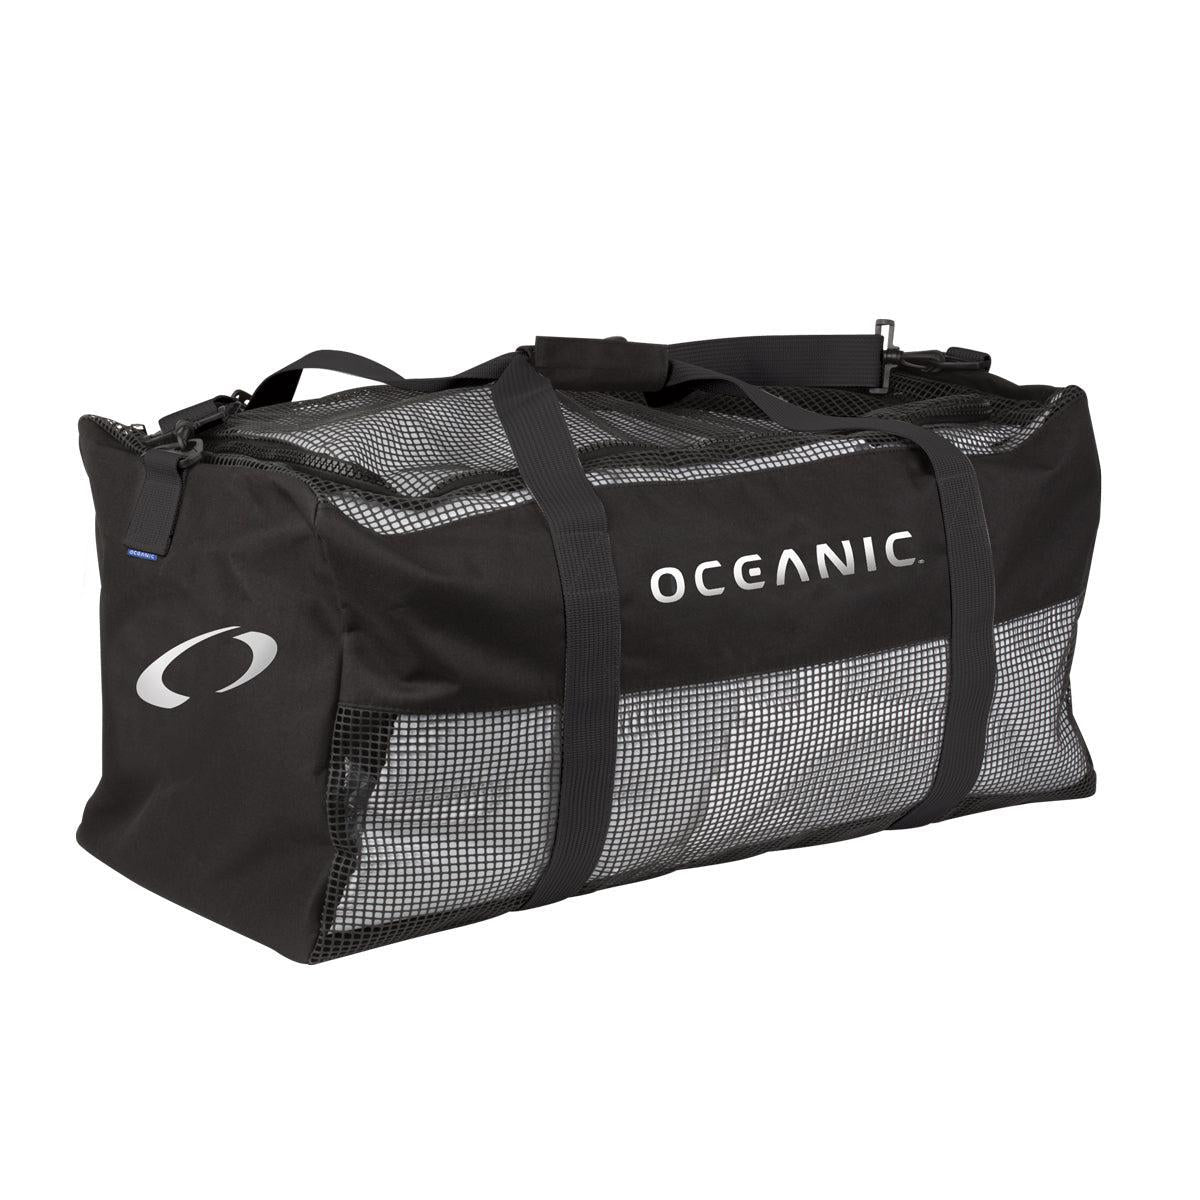 Oceanic Durable PVC-coated Nylon Mesh Duffel Bag-